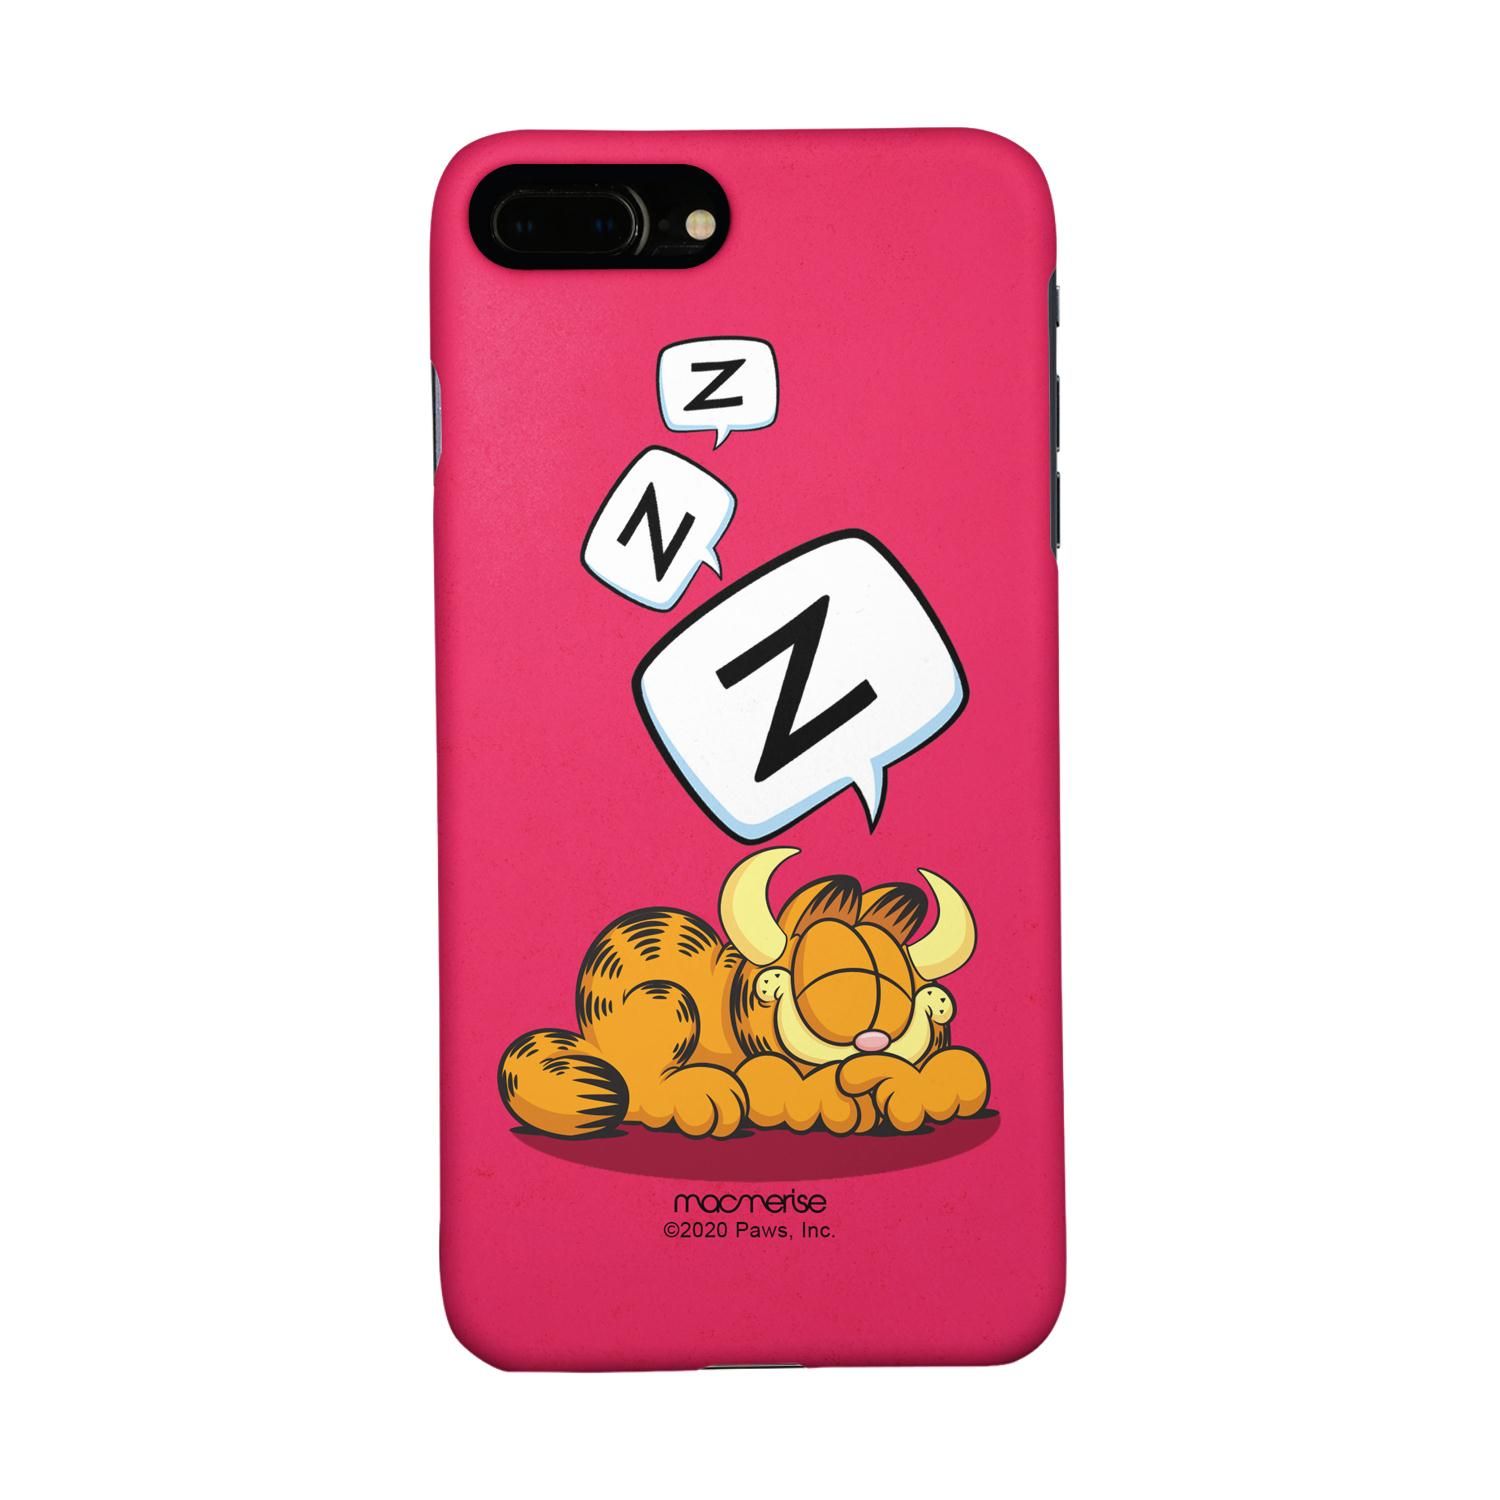 Sleepy Devil - Sleek Case for iPhone 7 Plus